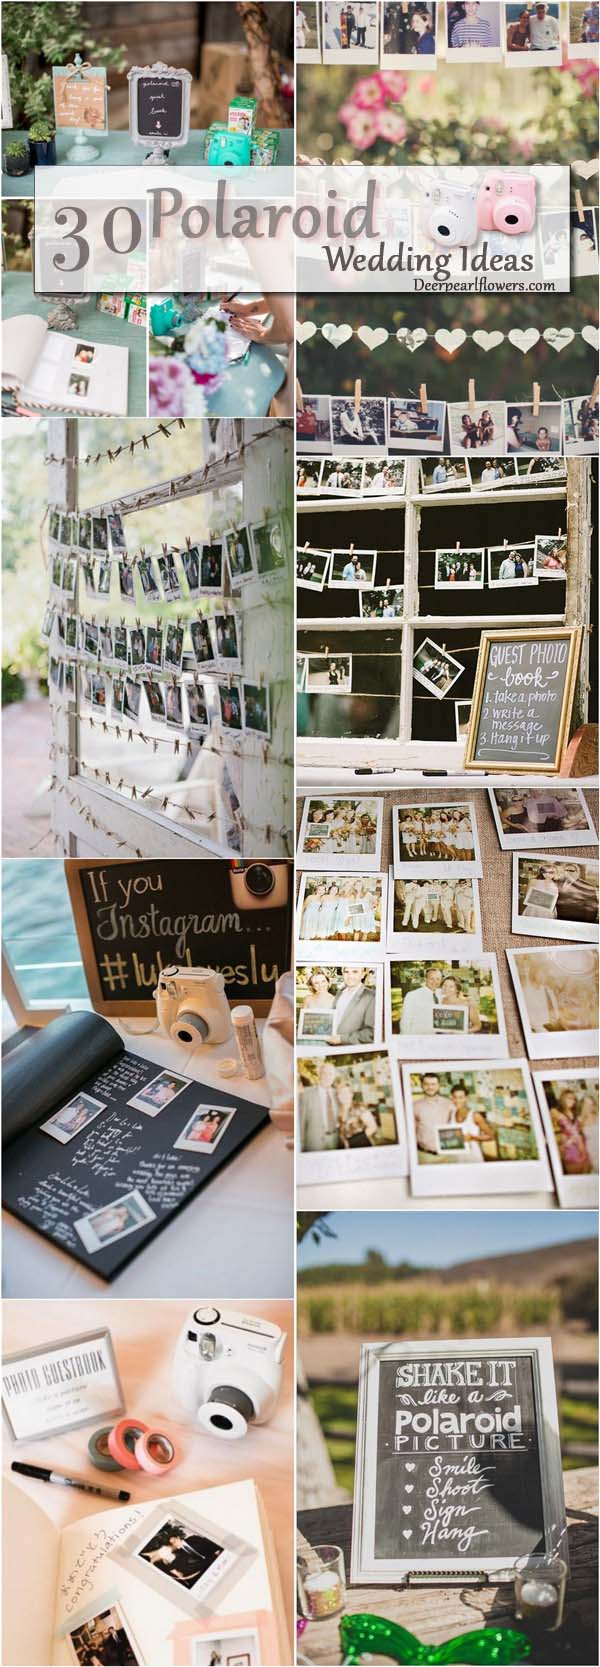 unique wedding ideas - Polaroid wedding guestbook ideas